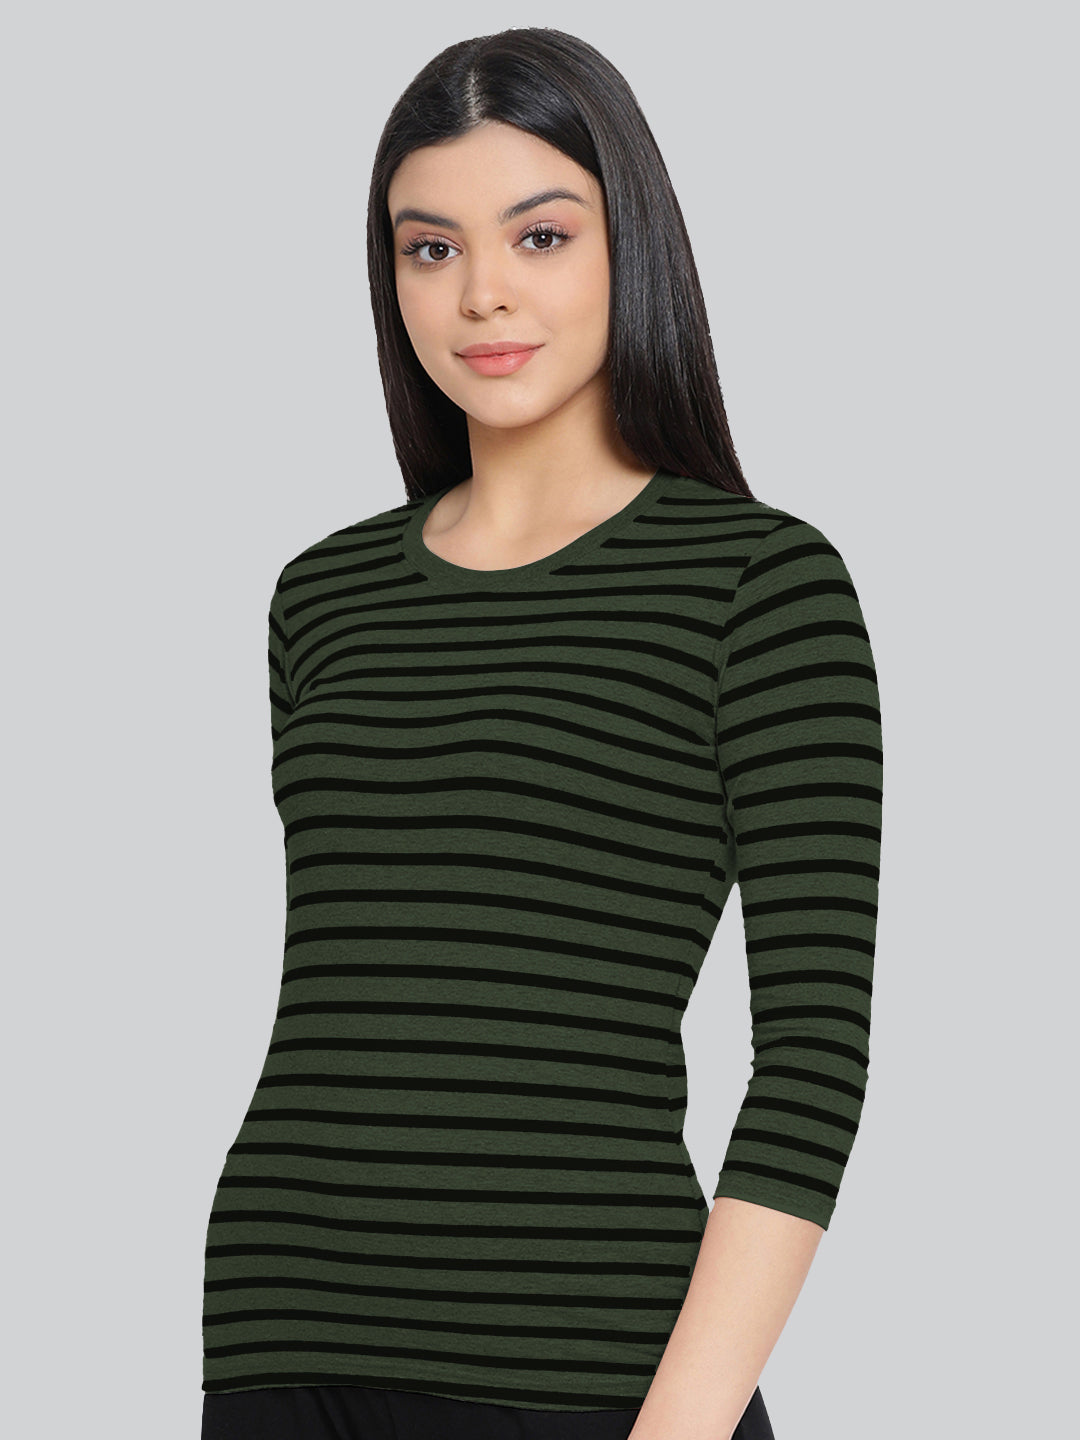 Olive Base with Black Stripes Round Neck 3/4 Sleeve T-Shirt #408